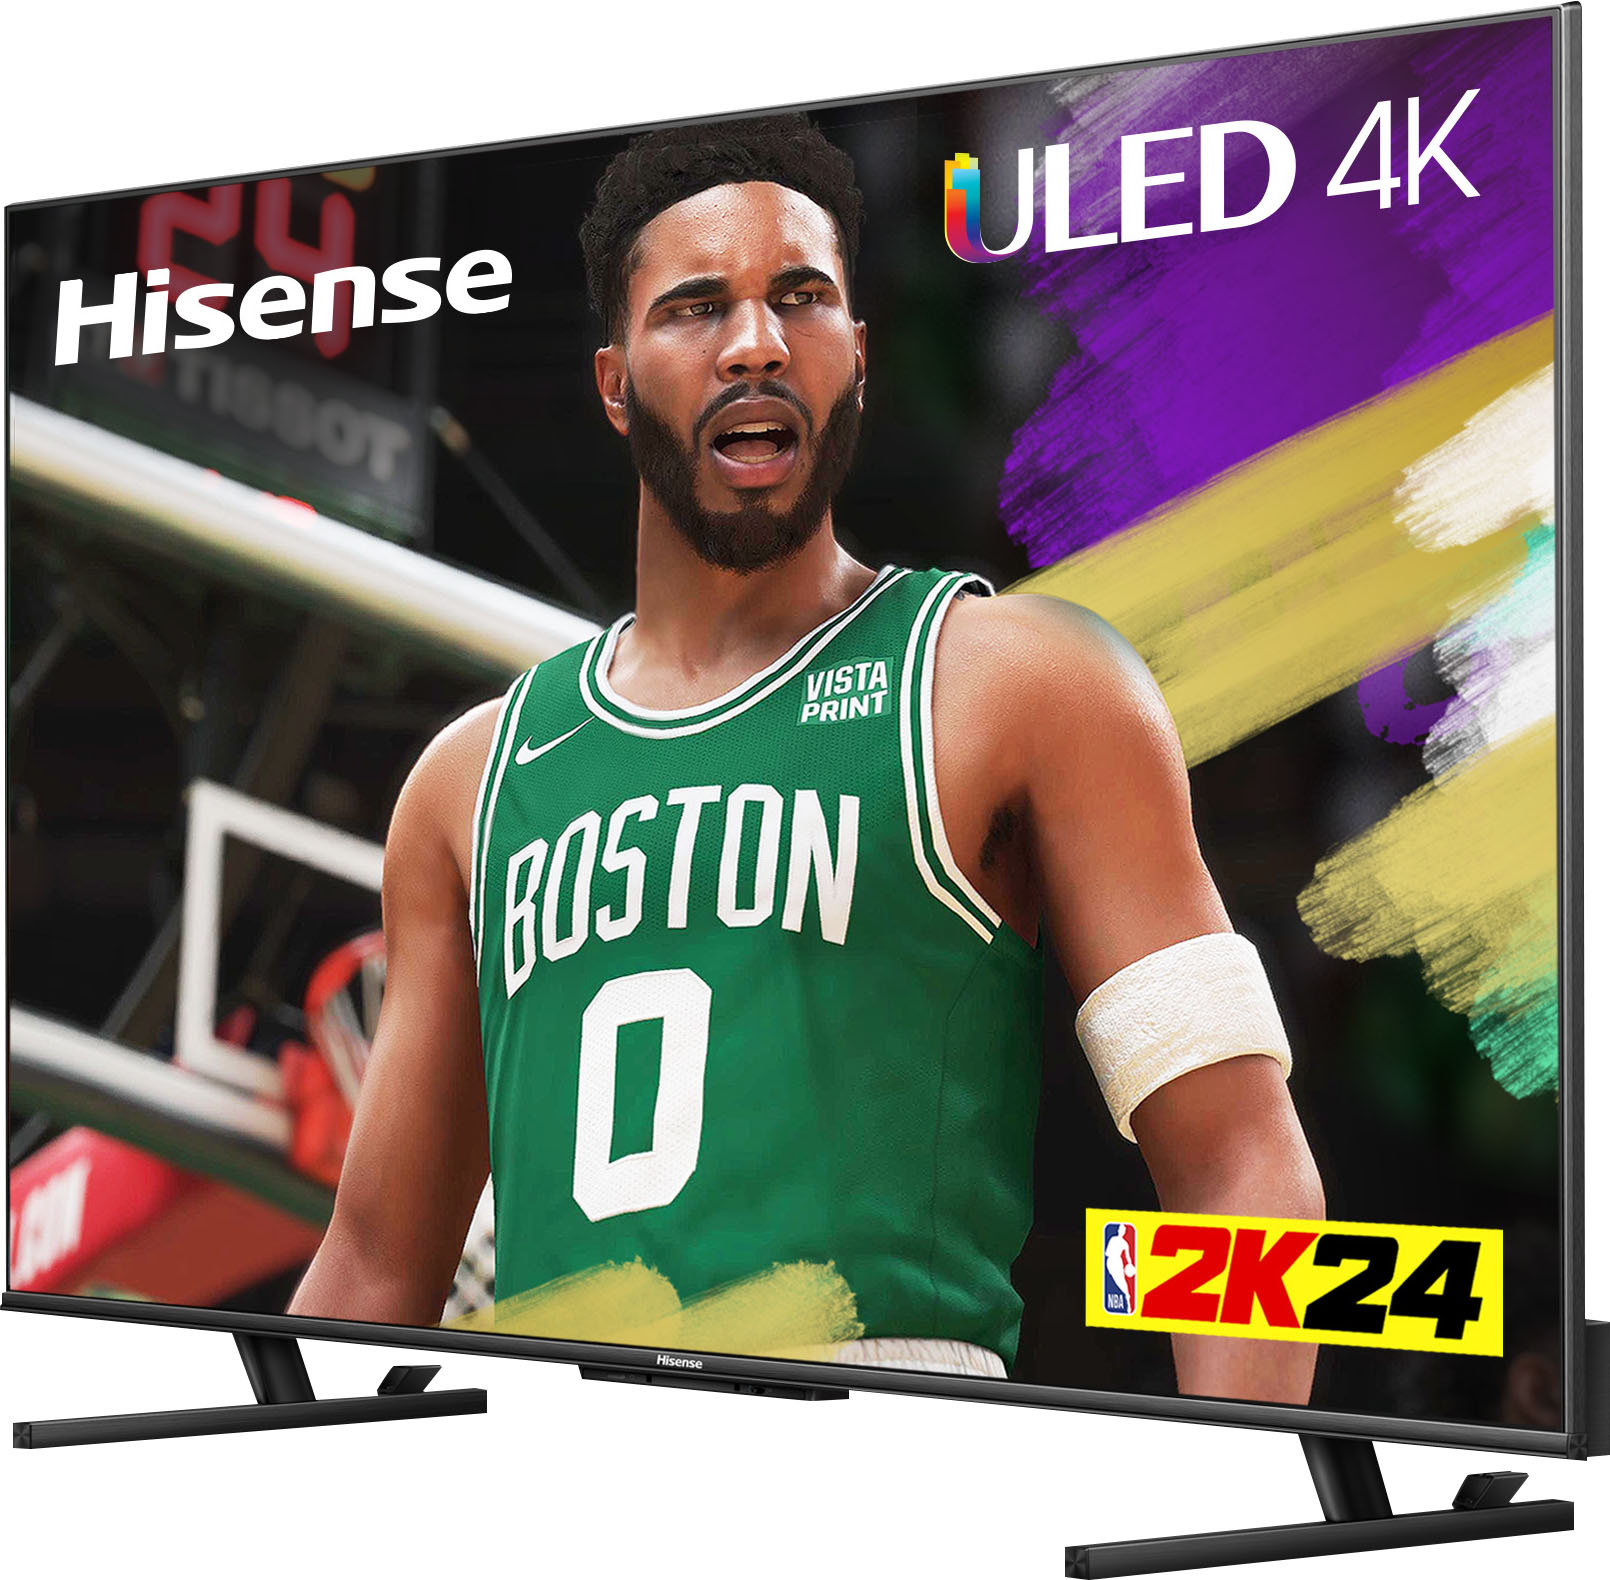  Hisense 75-Inch Class U6 Series Mini-LED ULED 4K UHD Google  Smart TV (75U6K) - QLED, Full Array Local Dimming, HDR 10+, Dolby Vision  IQ, VRR Game Mode, 240 Motion Rate, Alexa